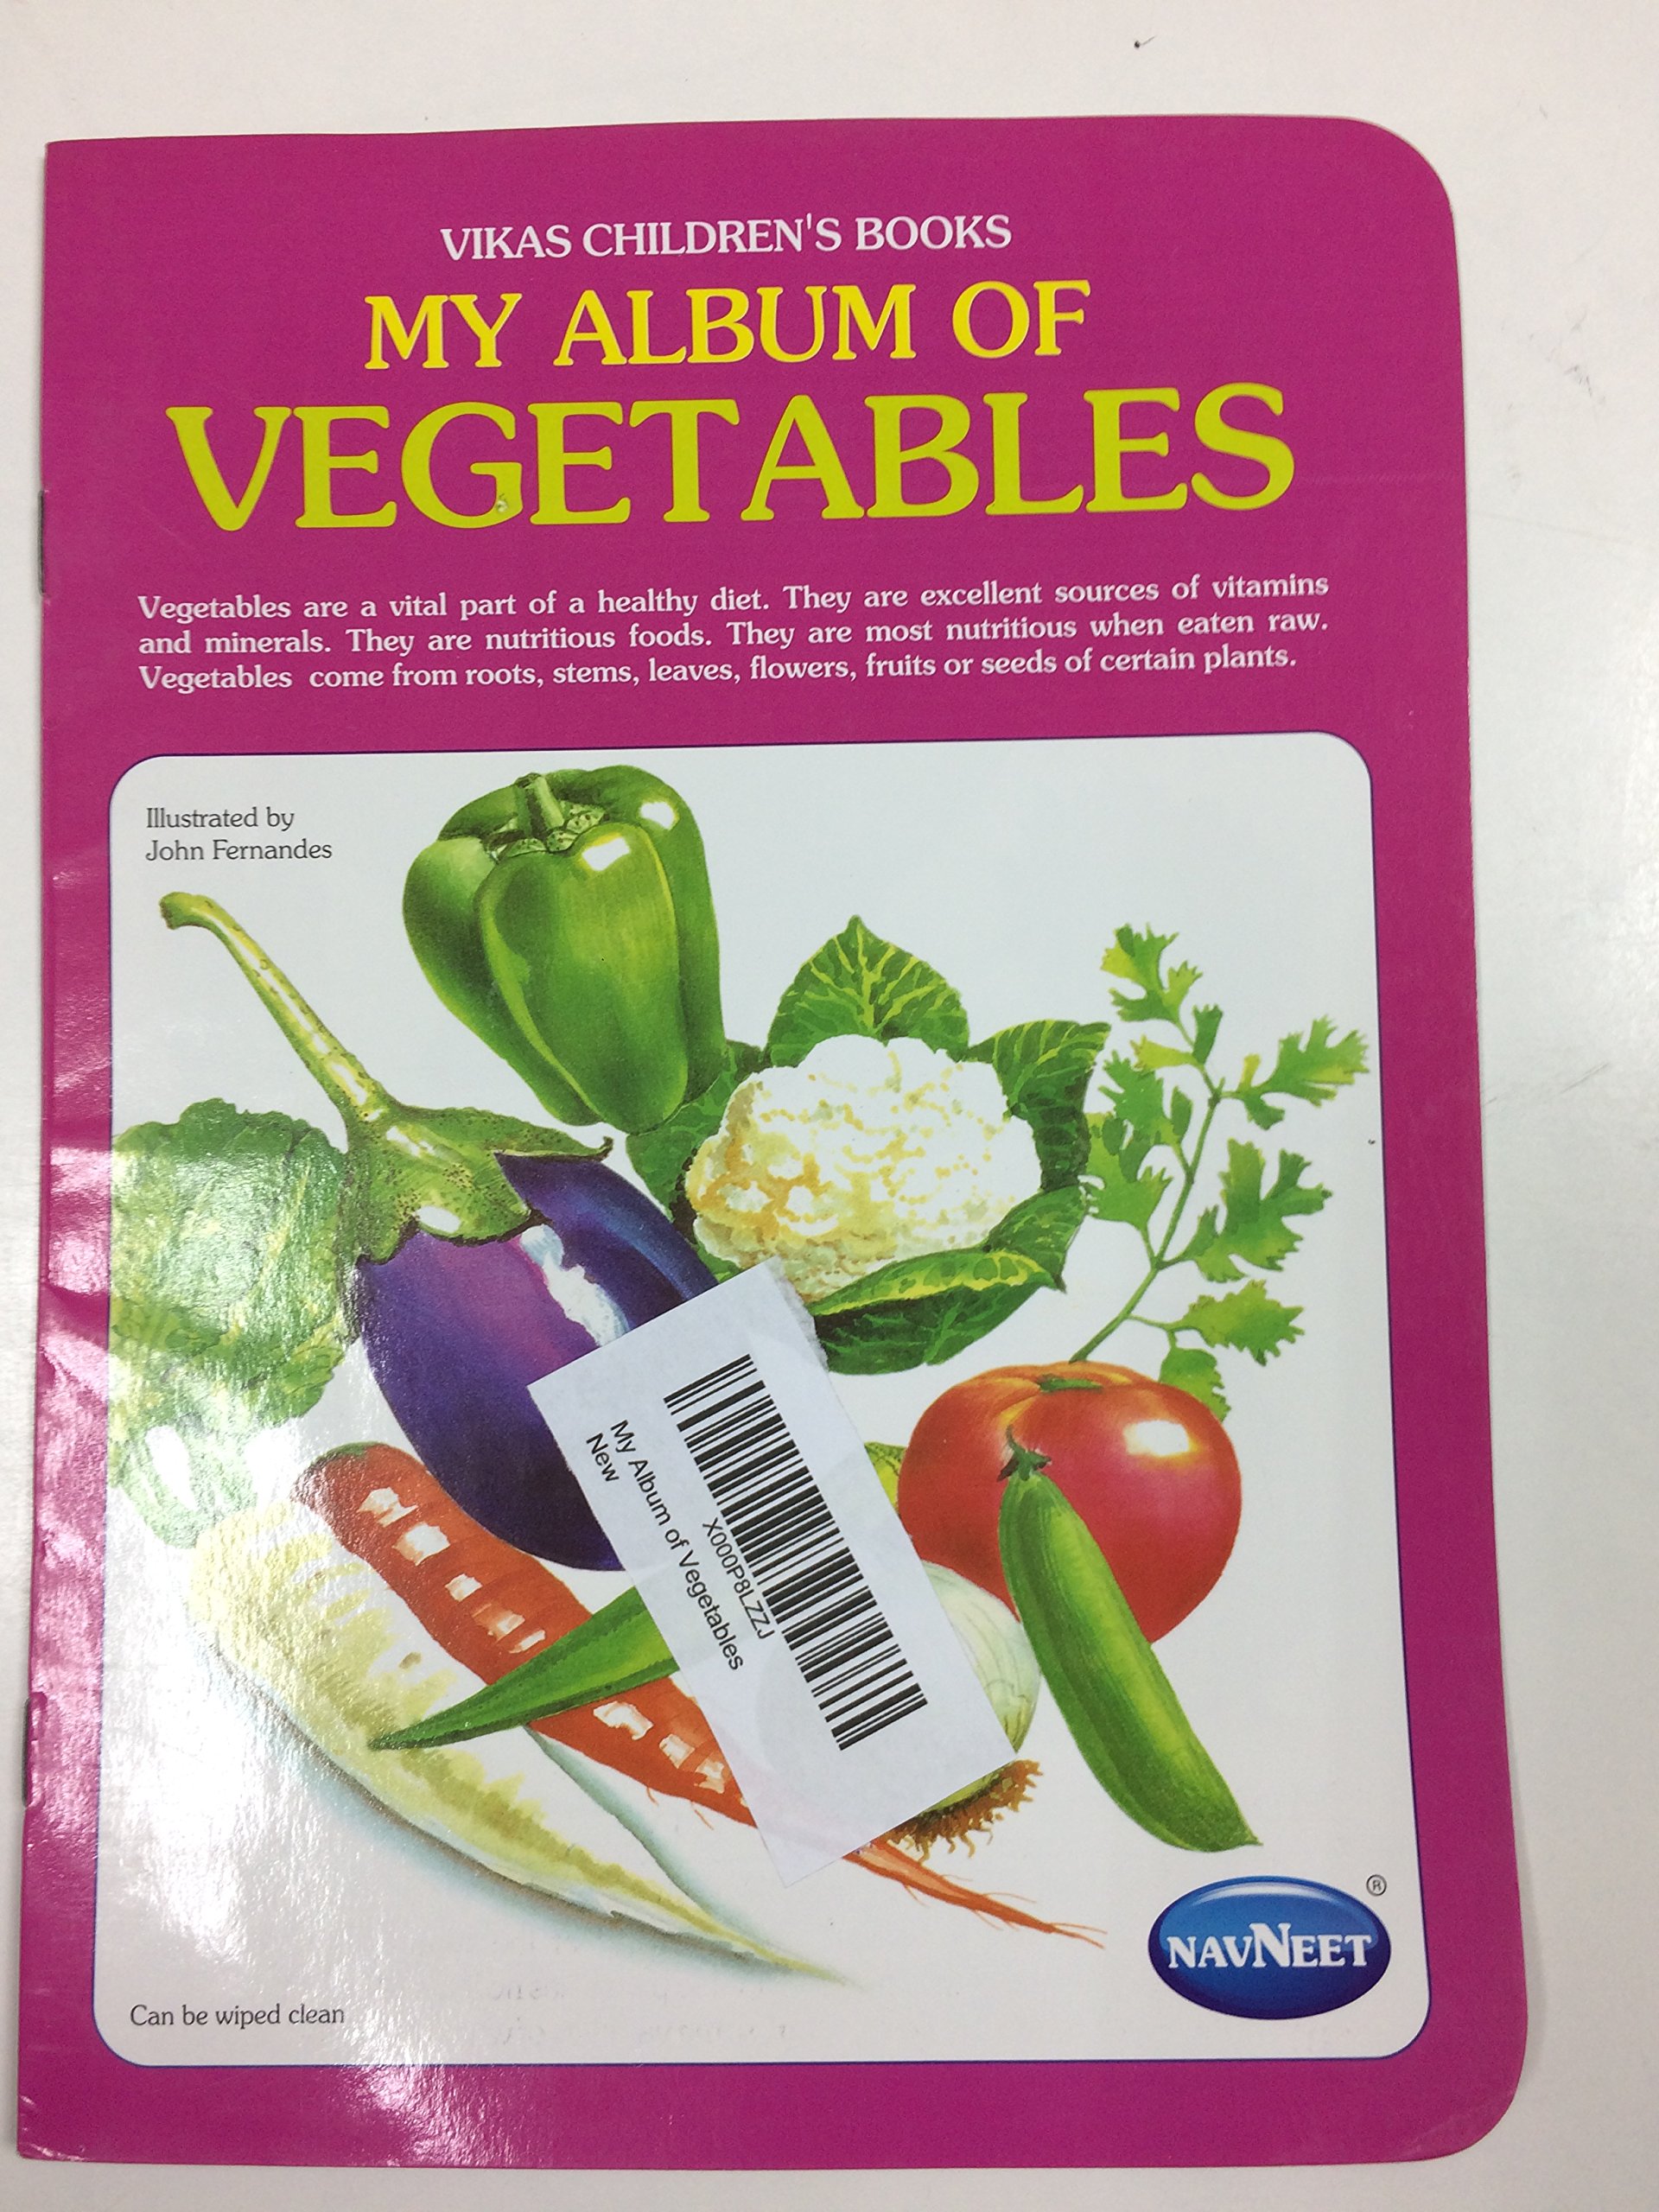 Vikas children's books : my album of vegetables